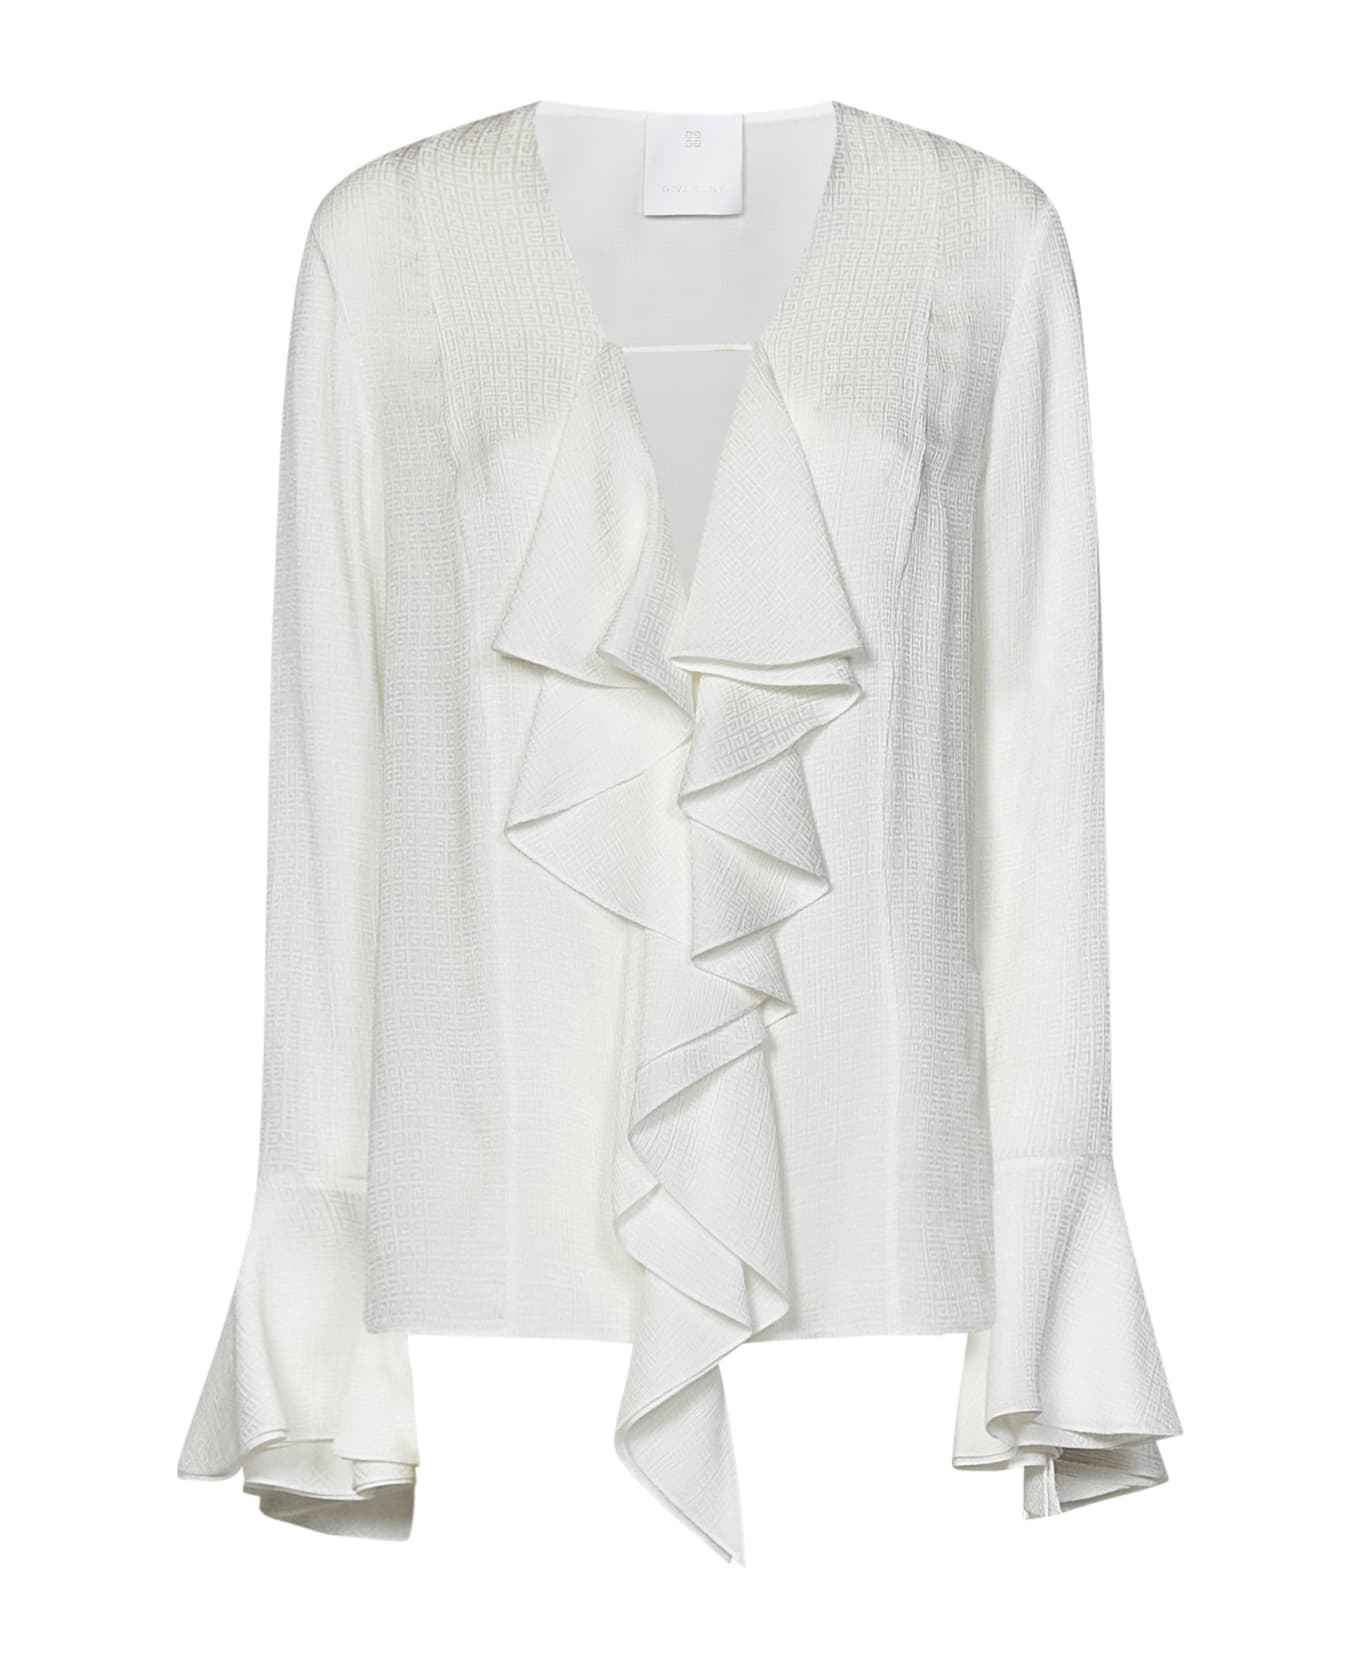 Givenchy 4g Shirt - White